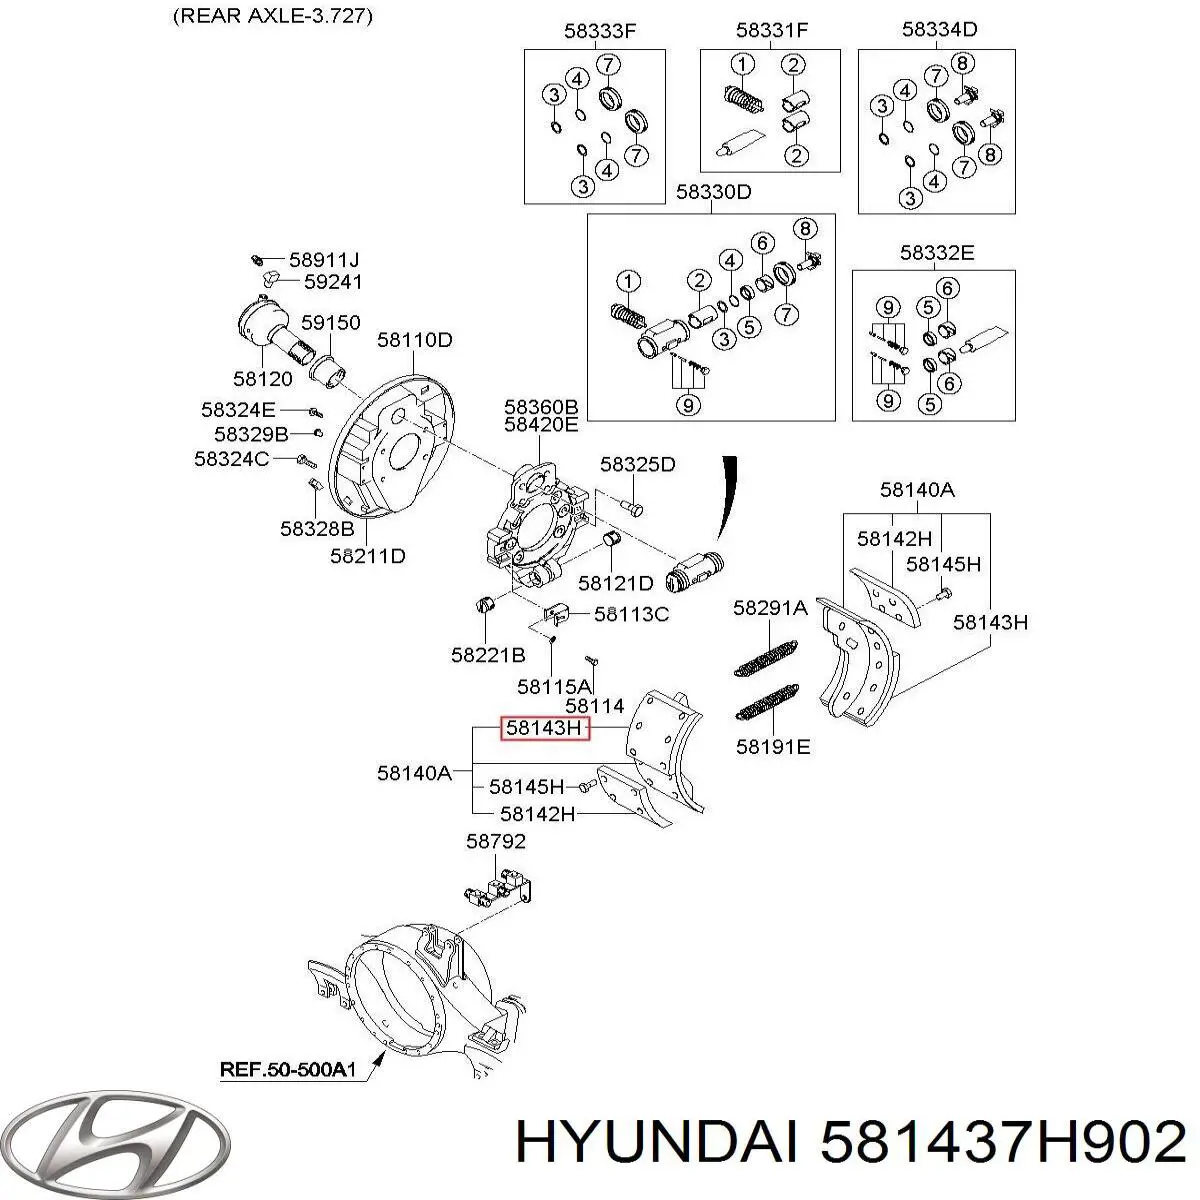 Накладка тормозная передняя (TRUCK) Hyundai/Kia 581437H902